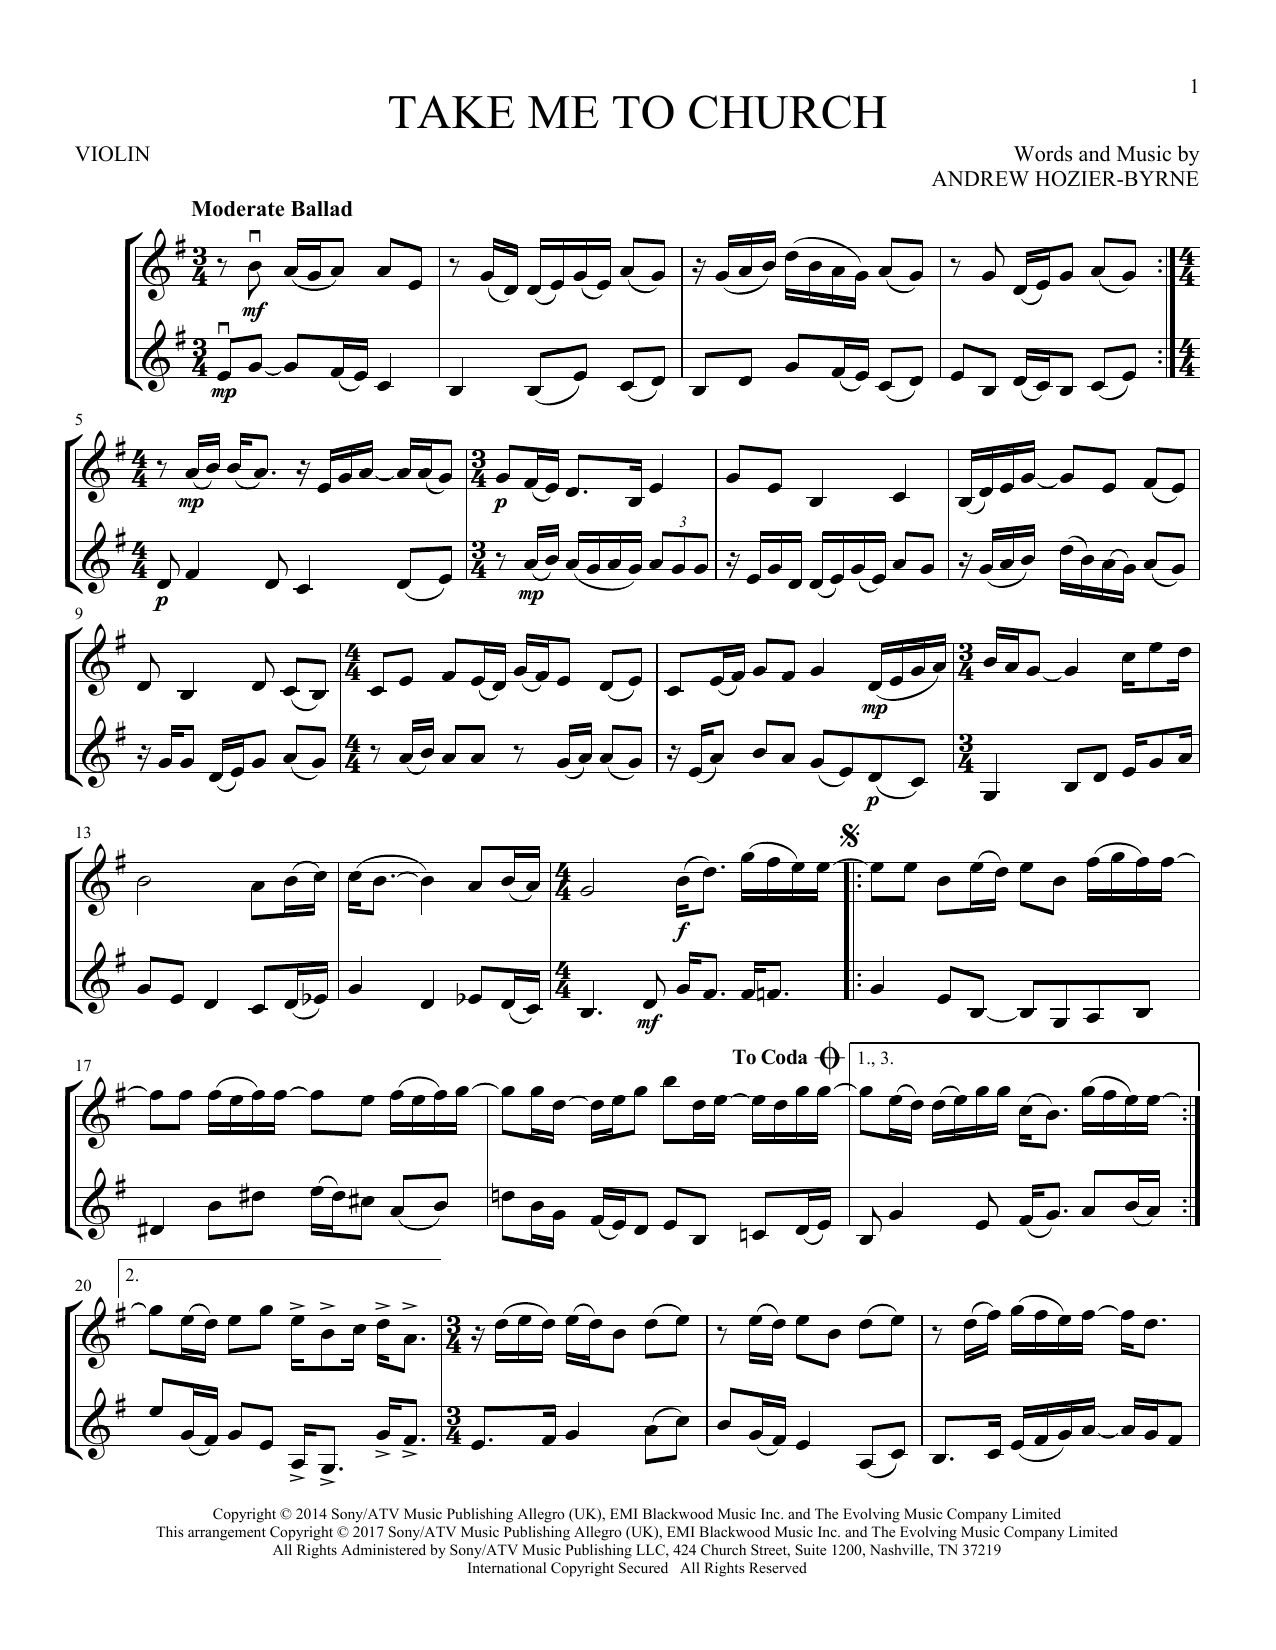 Hozier "Take Me To Church" Sheet Music Notes | Download Printable Pdf Score 161080